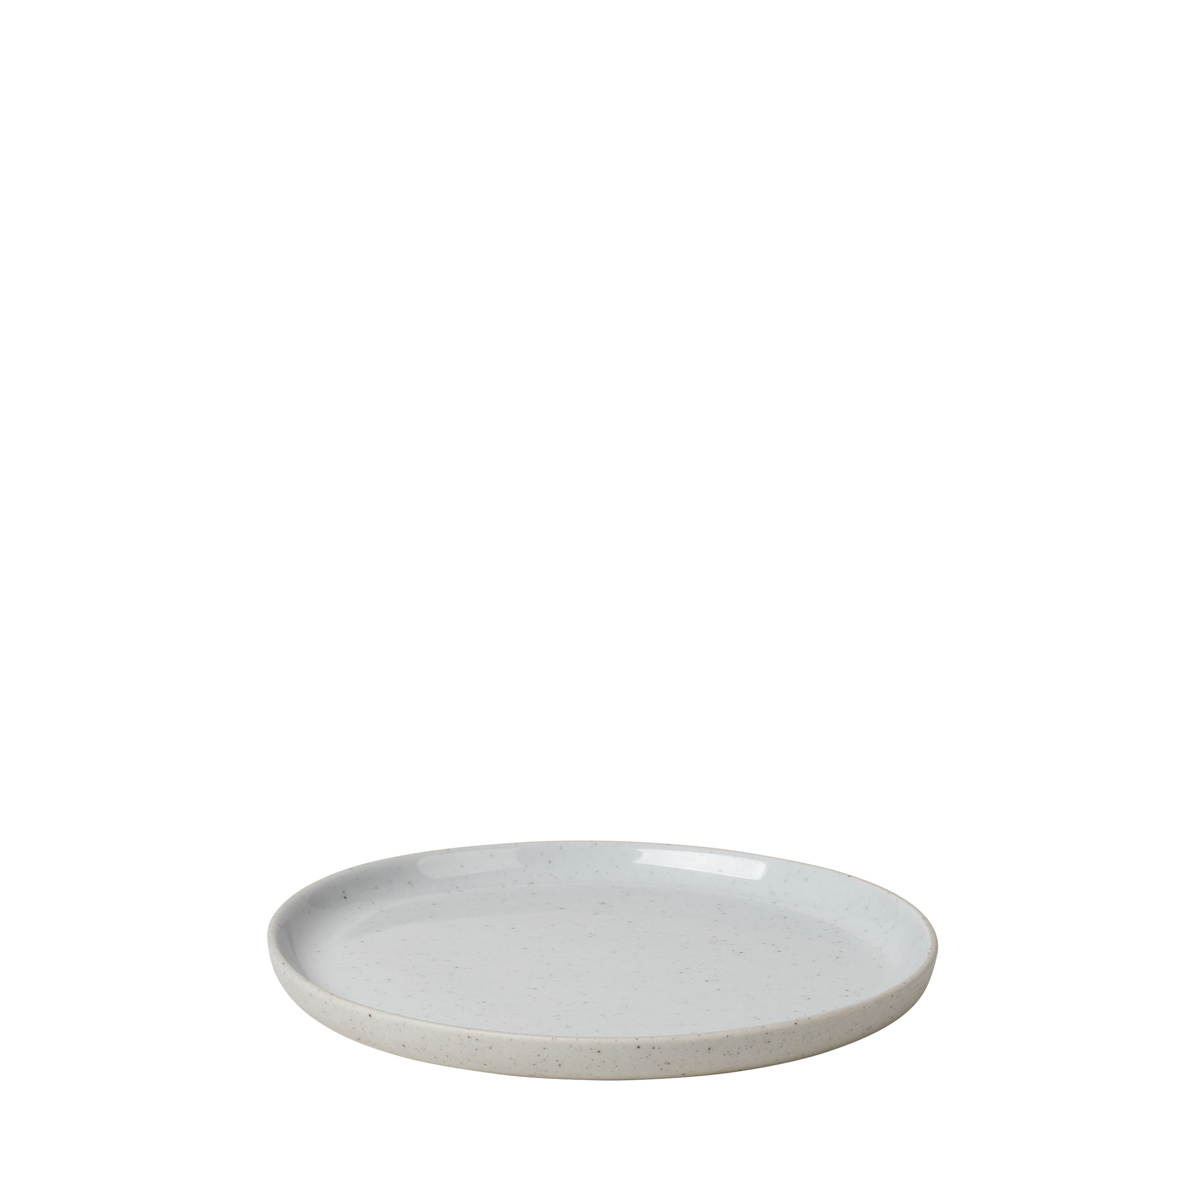 Beilagenteller -SABLO- Cloud, Ø 14 cm. Material: Keramik. Von Blomus.